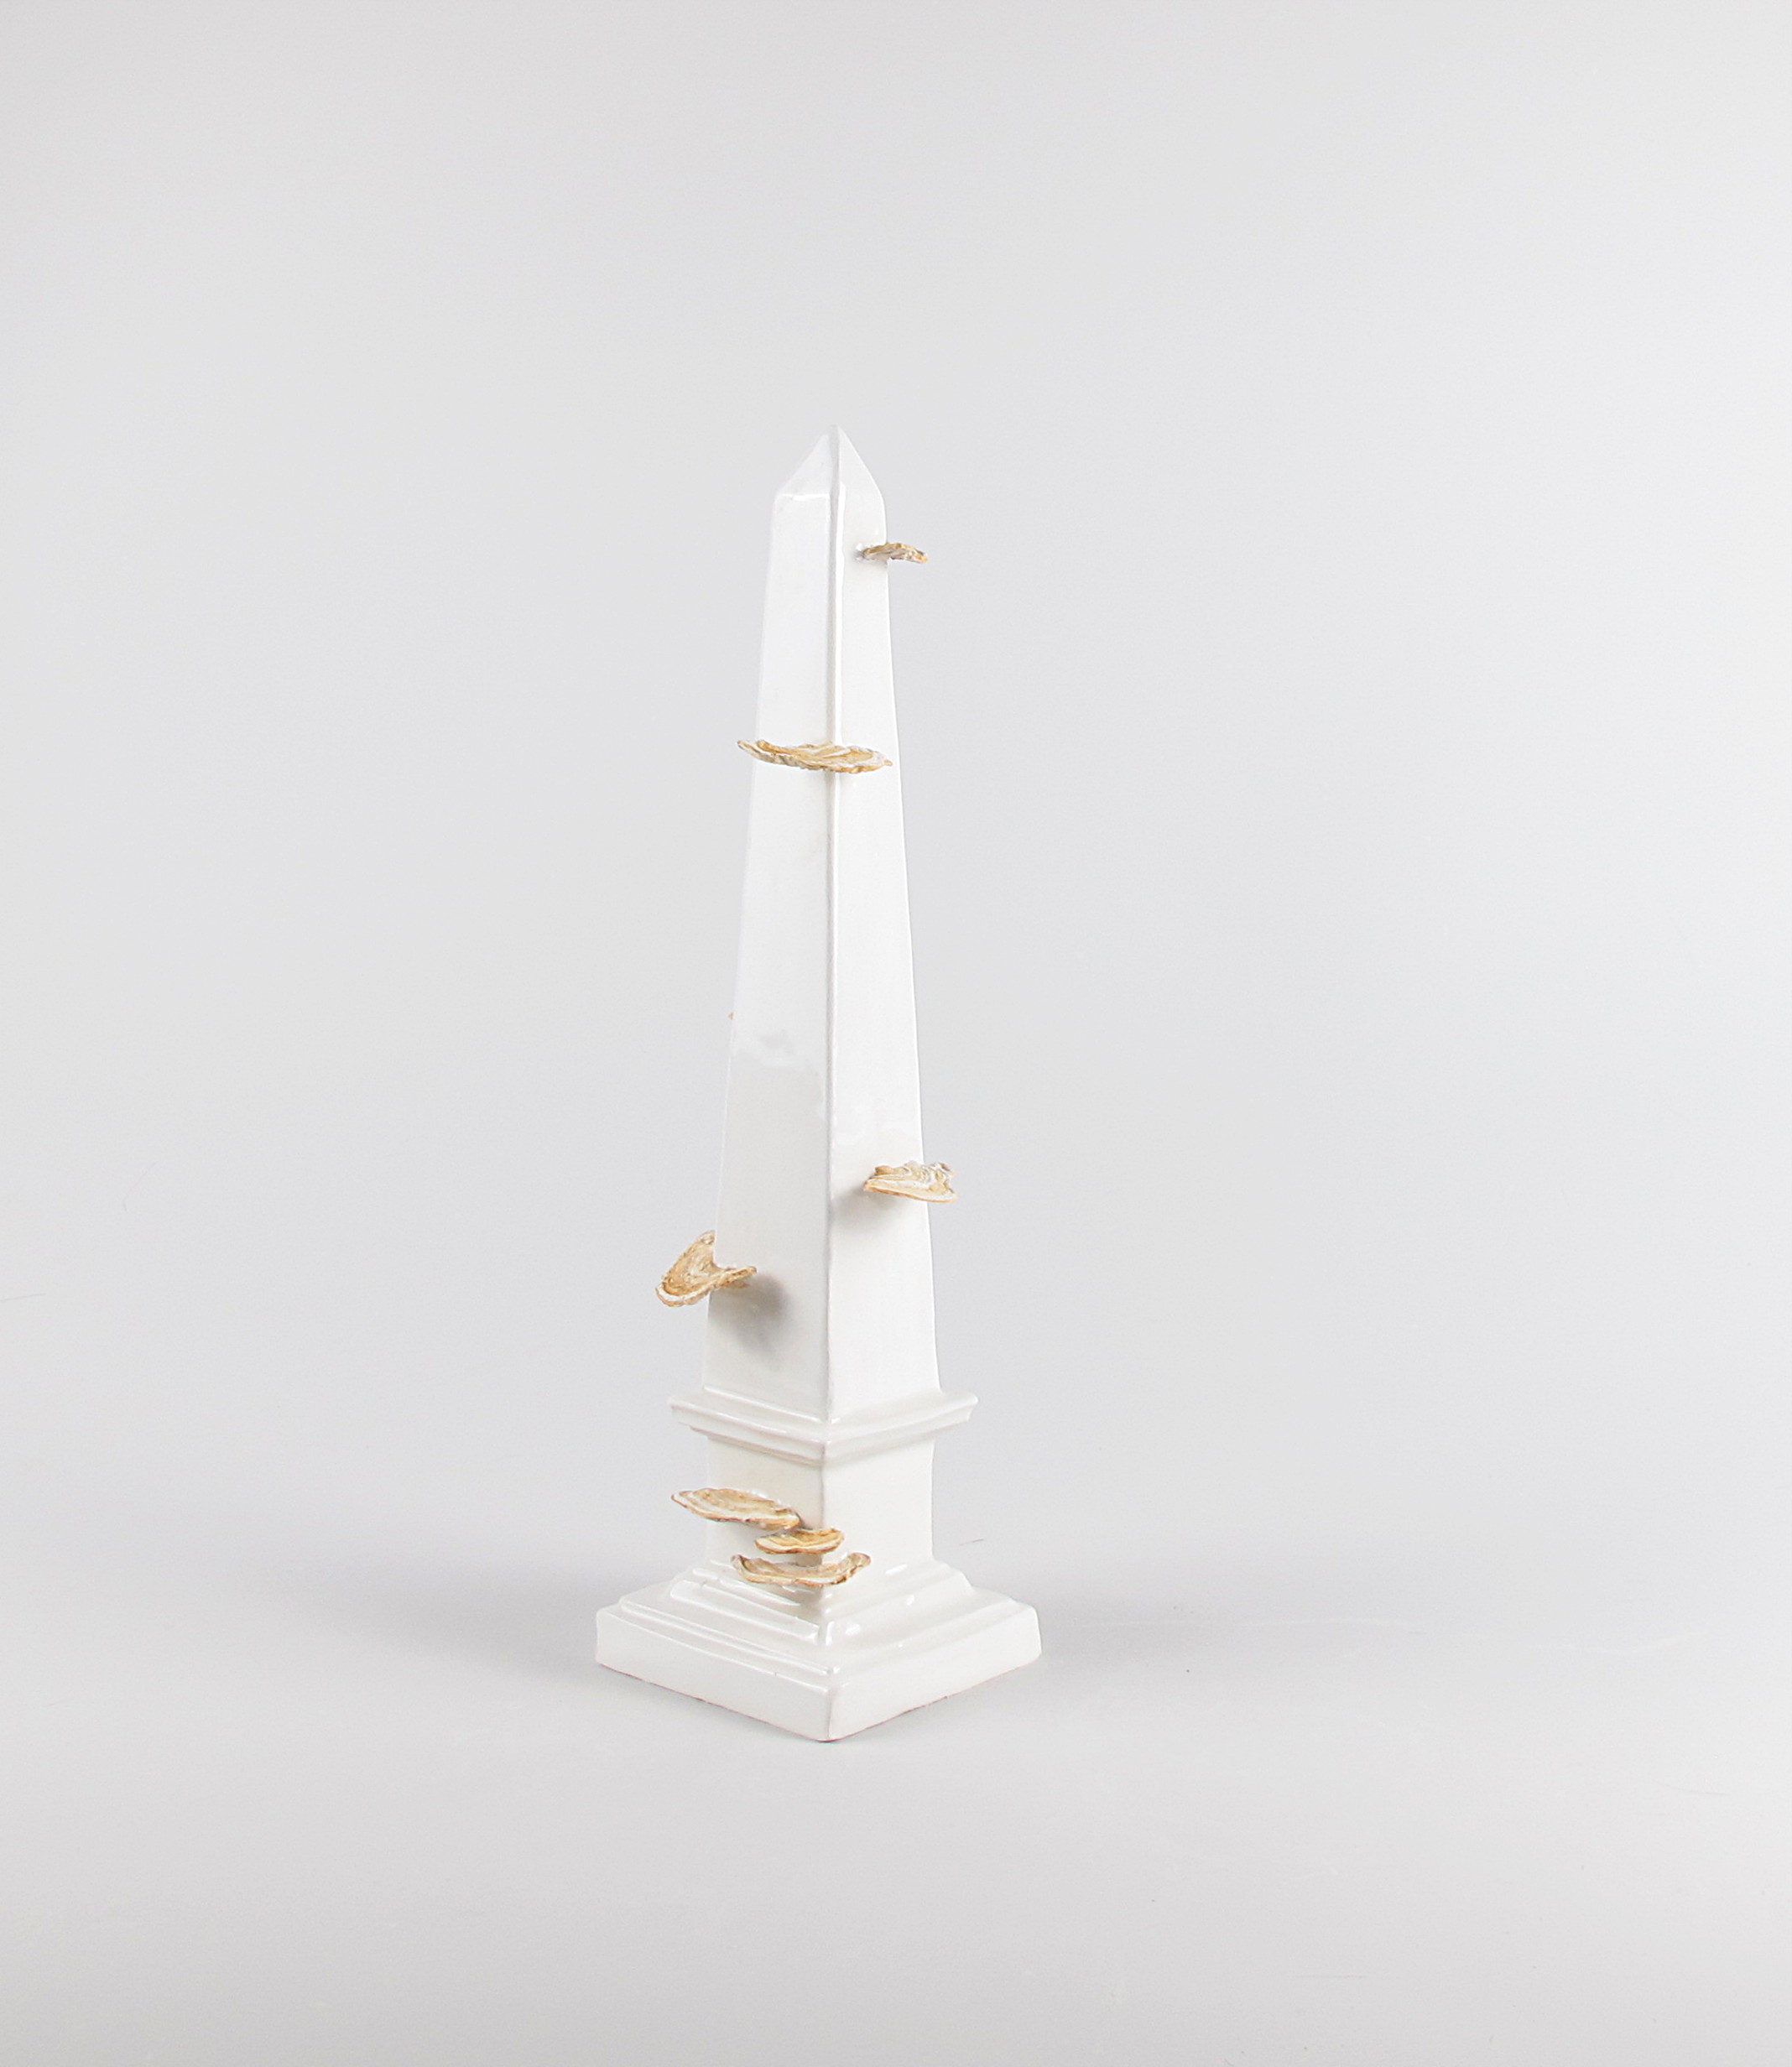 Monumento al tempo, Caterina Sbrana, 2020 contemporary art ceramic